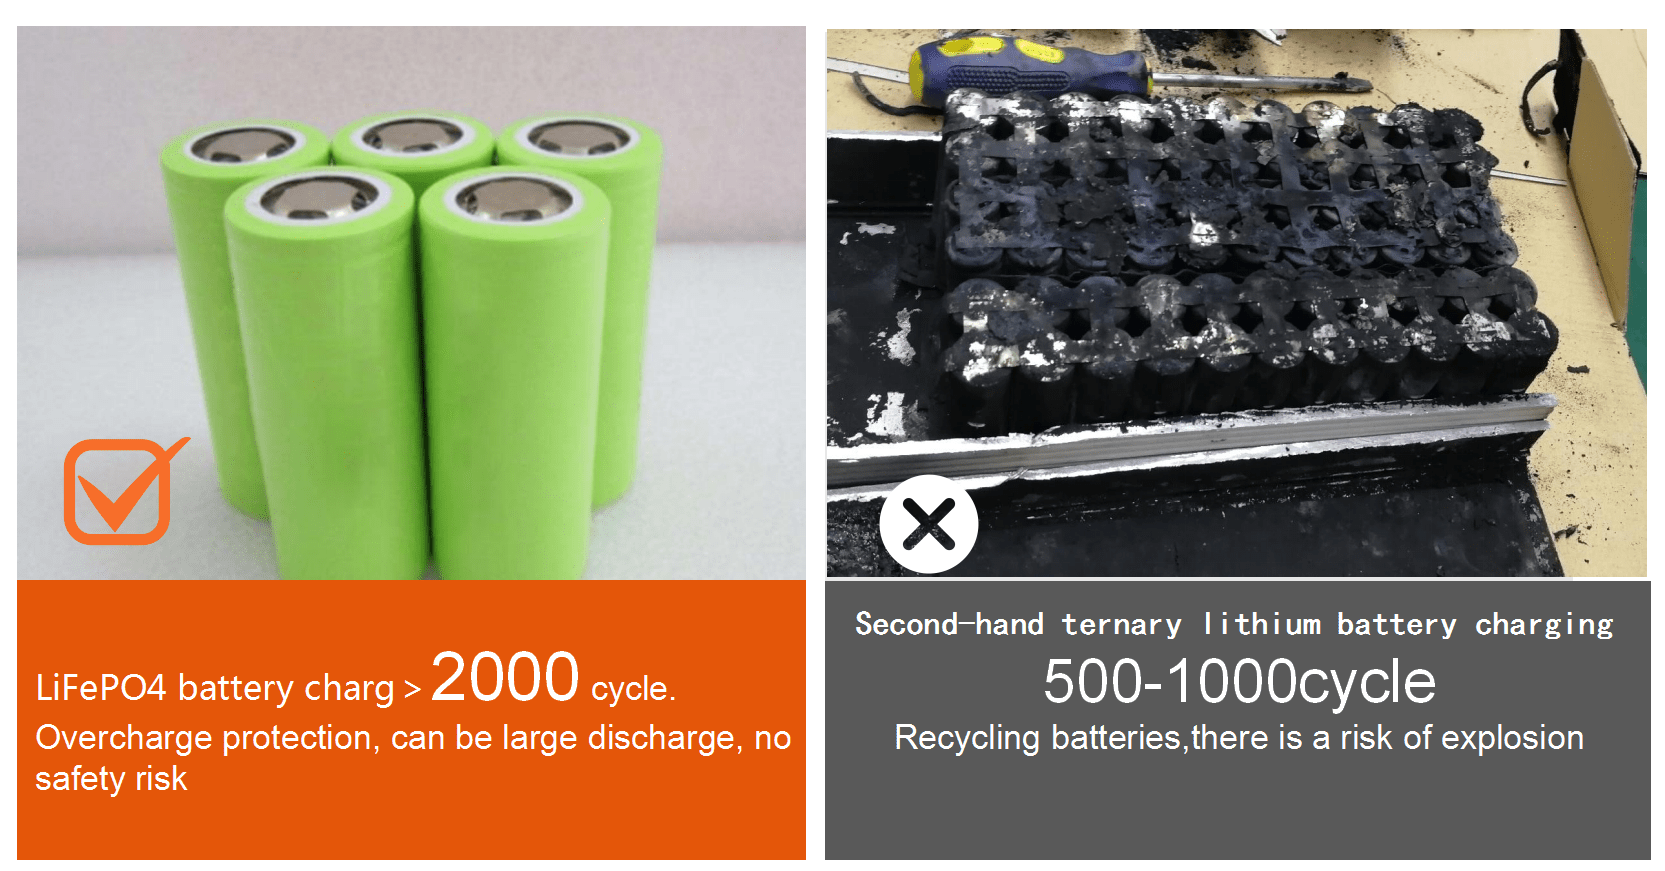 LIfe PO4 battery VS second-hand battery